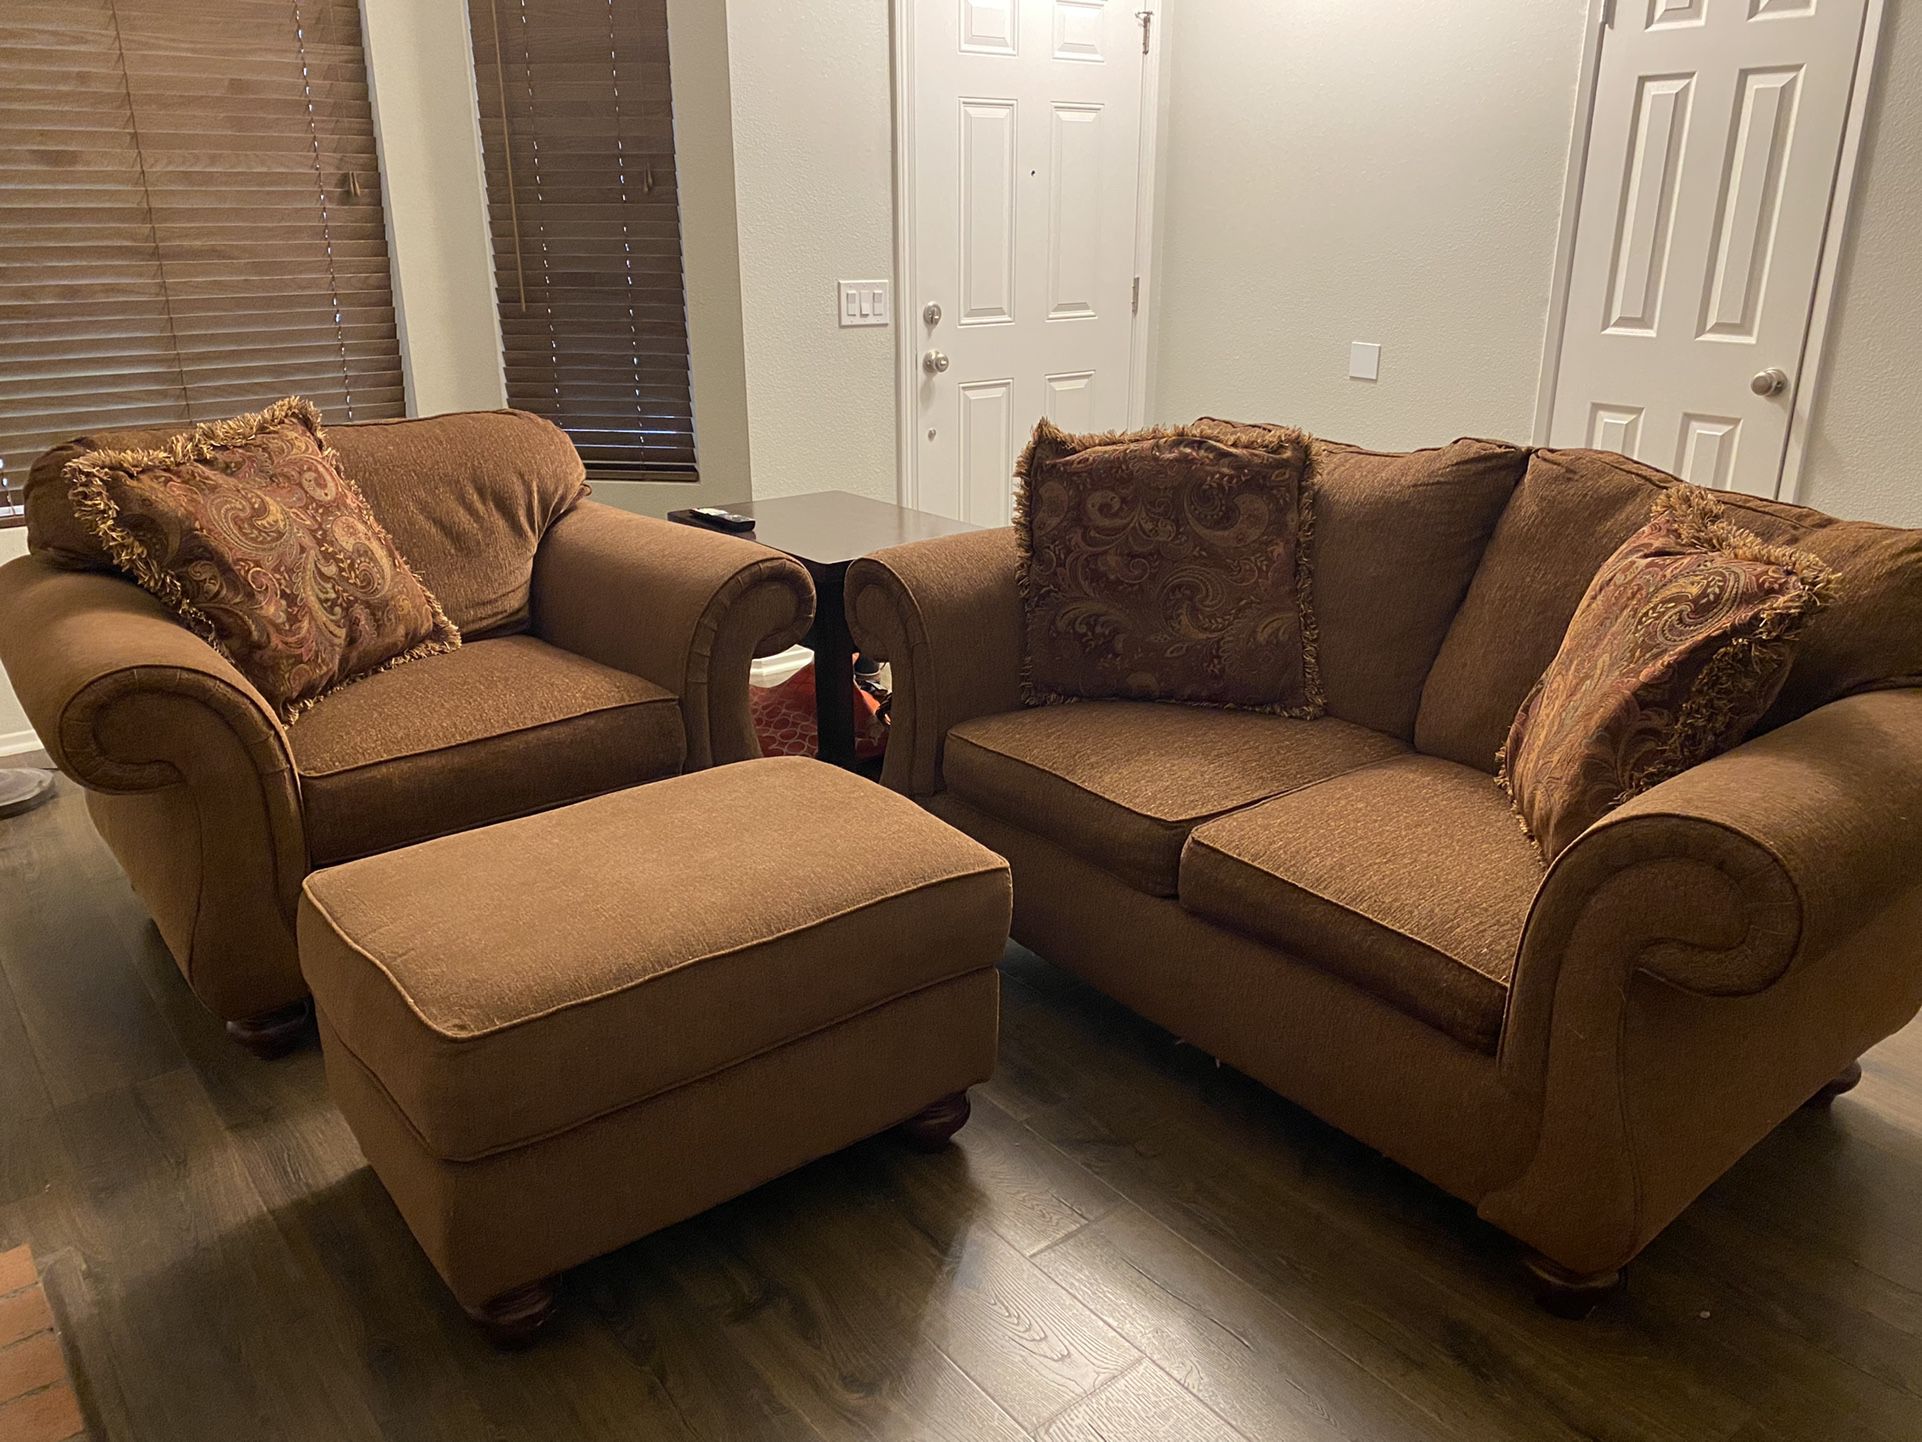 Sofa, Loveseat, Chair, Ottoman - 4pc Set